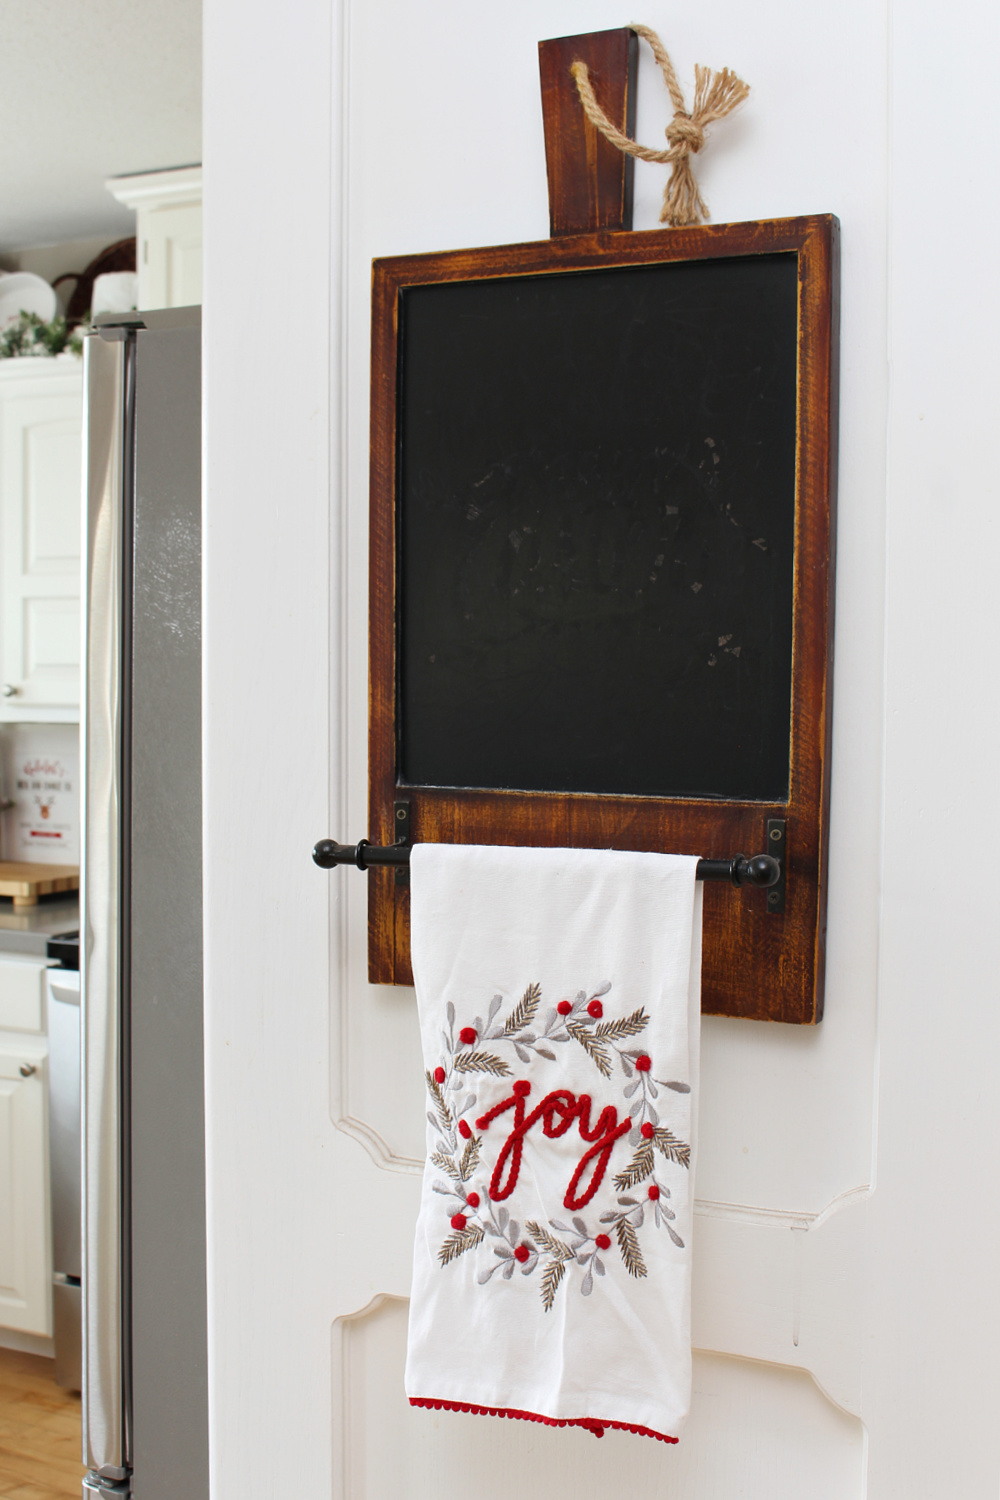 Chalkboard towel holder with Christmas towel.